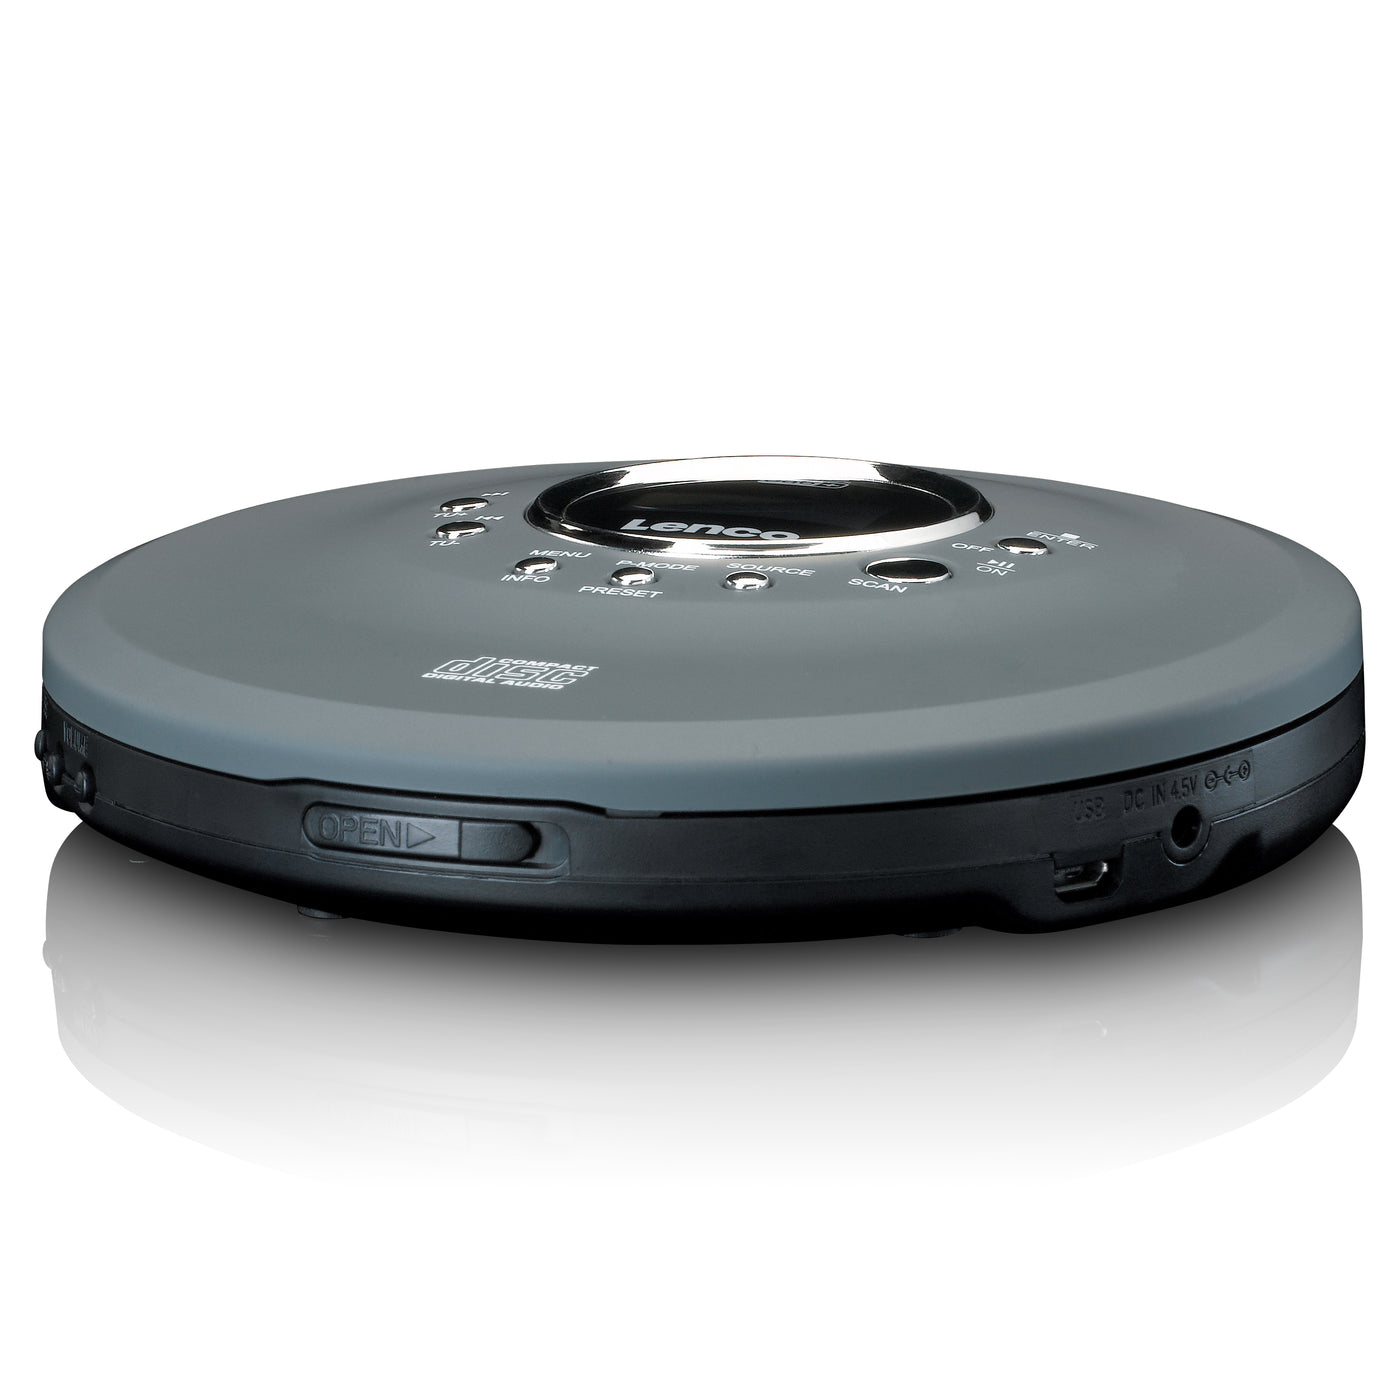 Lenco CD-400GY - Tragbarer CD/MP3-Player für CD, CD-R, CD-RW